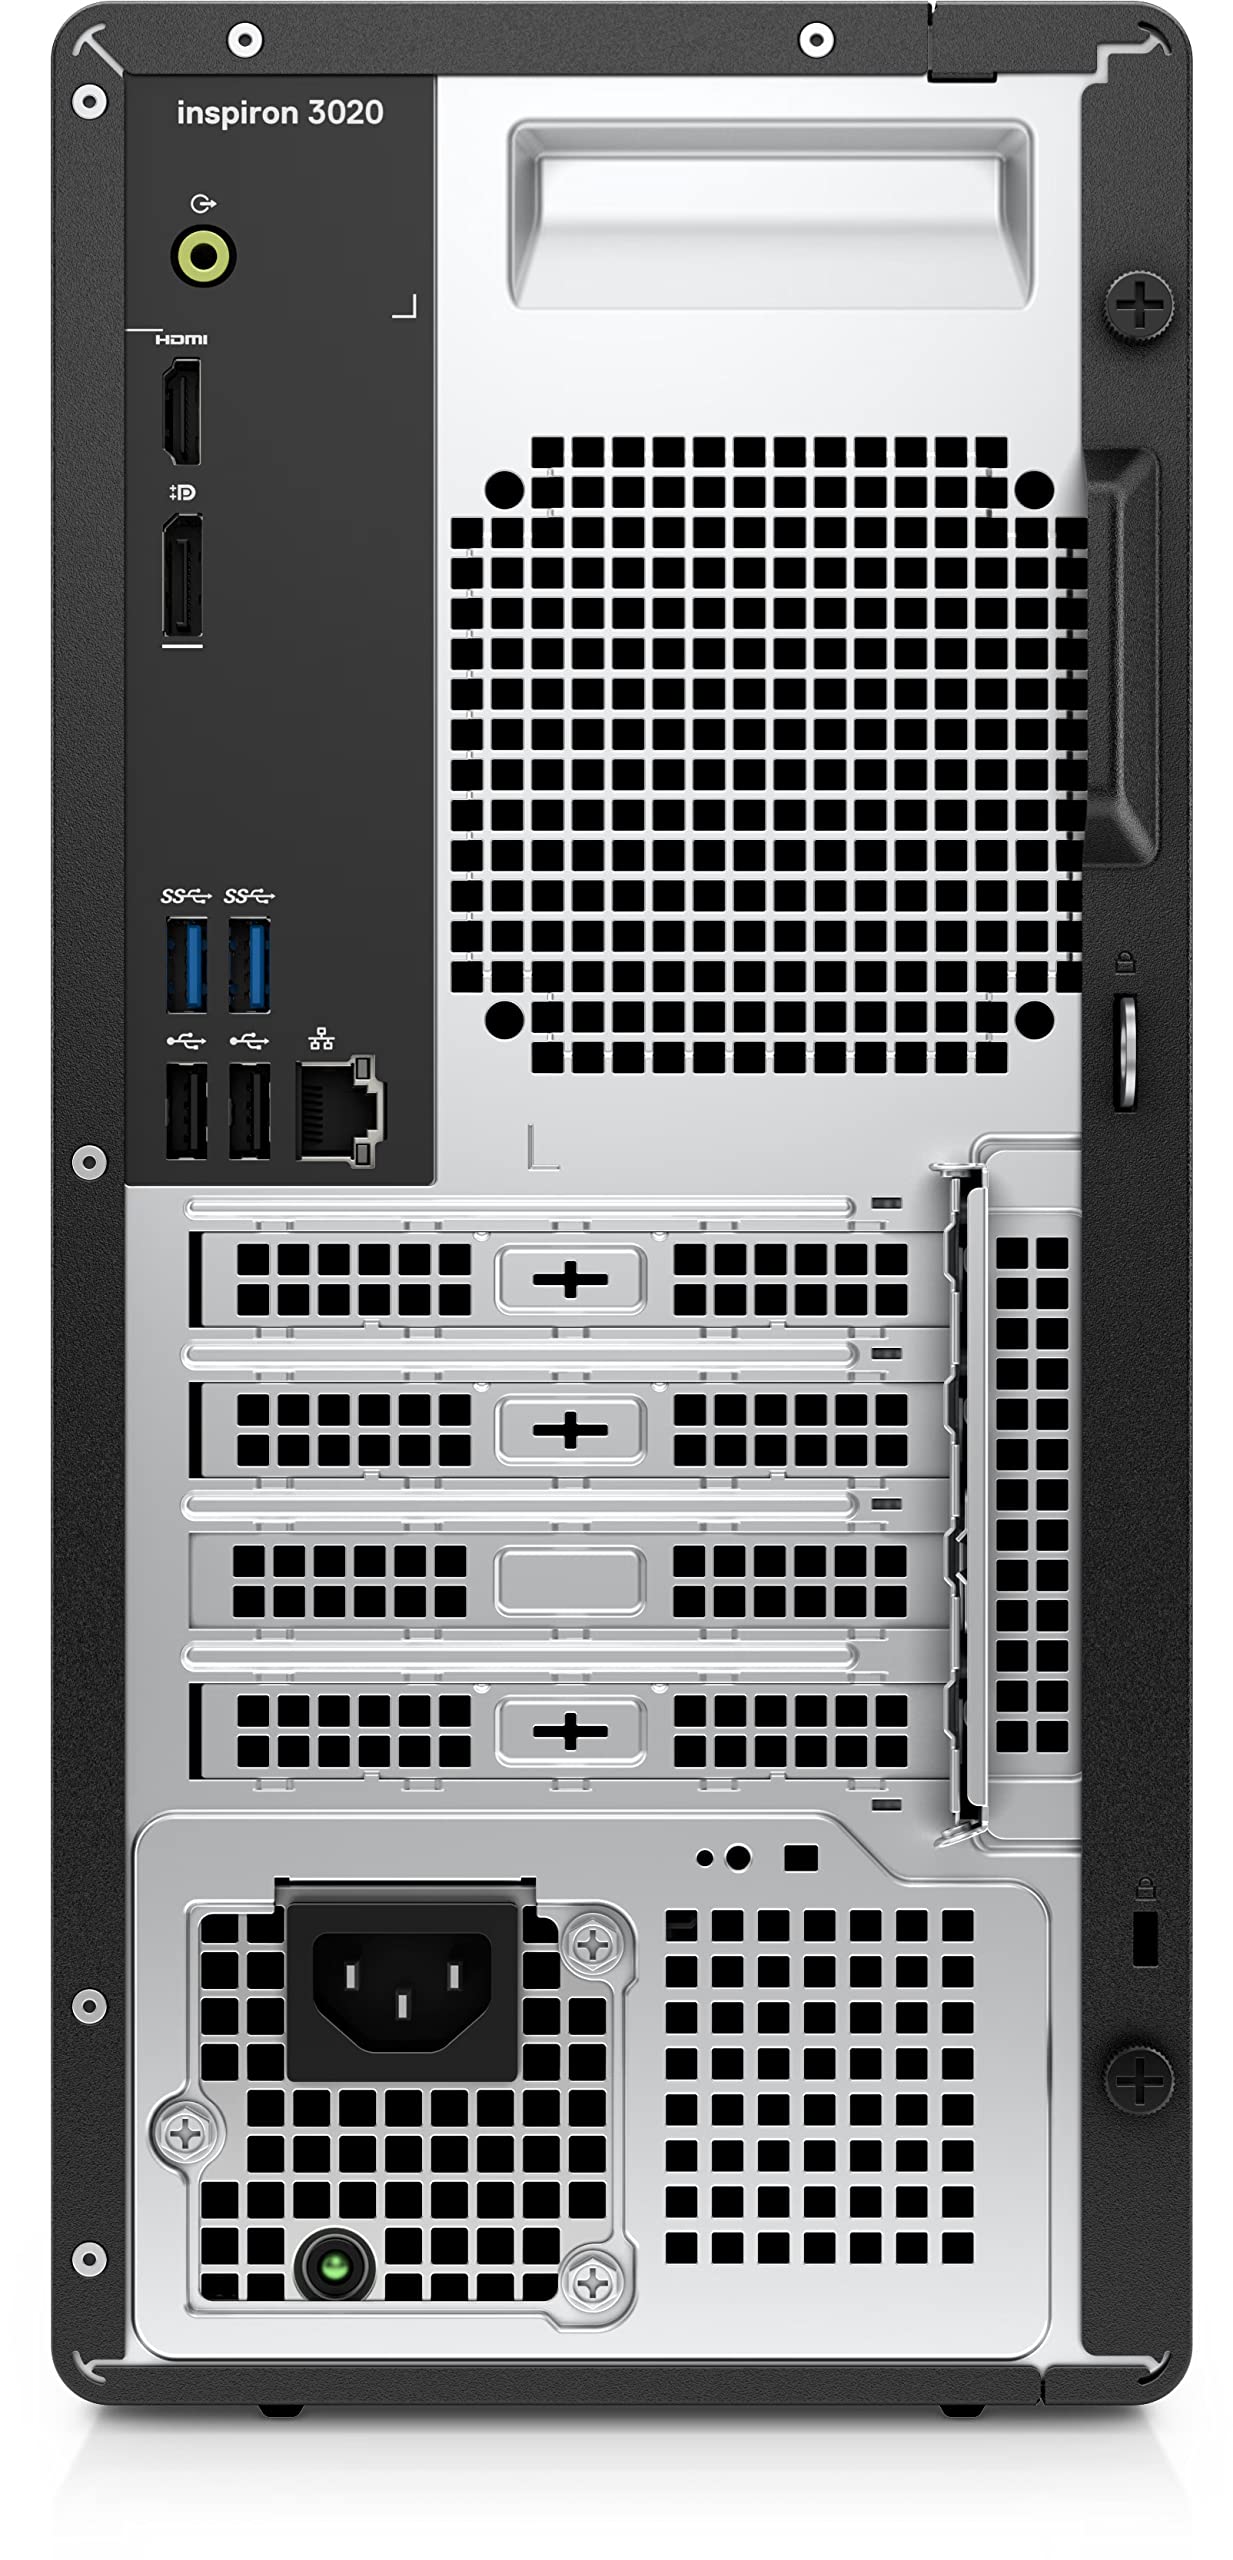 Dell Inspiron 3020 Tower Desktop Computer - 13th Gen Intel Core i5-13400 10-Core up to 4.60 GHz Processor, 64GB DDR4 RAM, 256GB NVMe SSD + 1TB HDD, Intel UHD Graphics 730, DVD+RW, Windows 11 Home